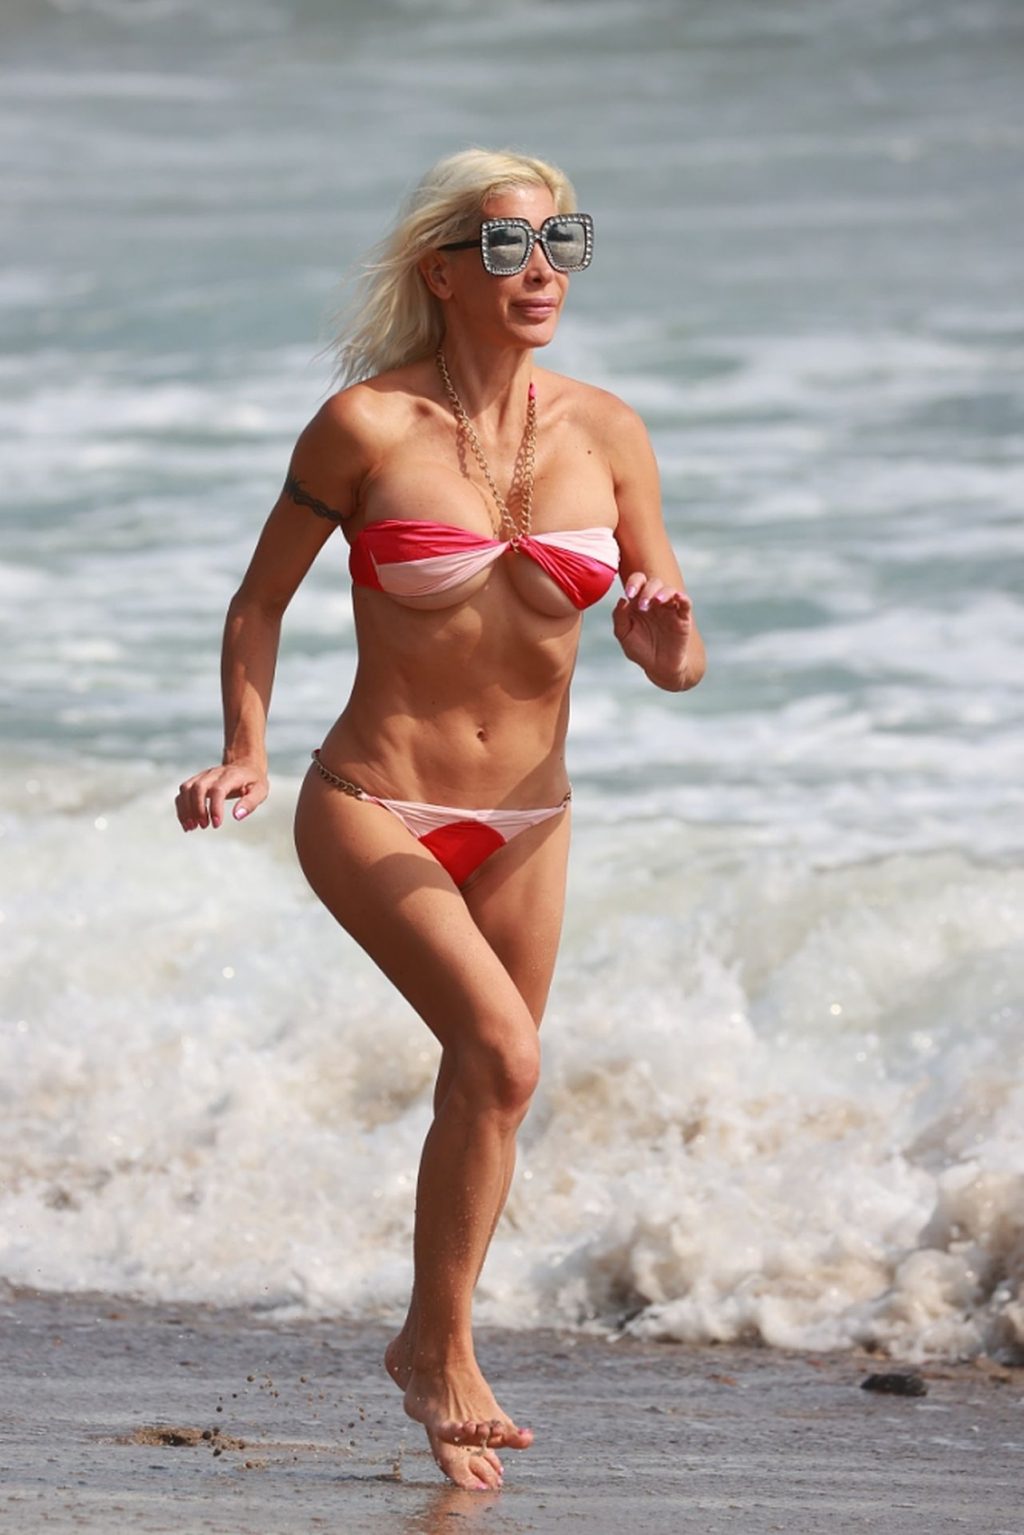 Angelique Morgan Flaunts Her Sexy Bikini Body on the Beach (23 Photos)